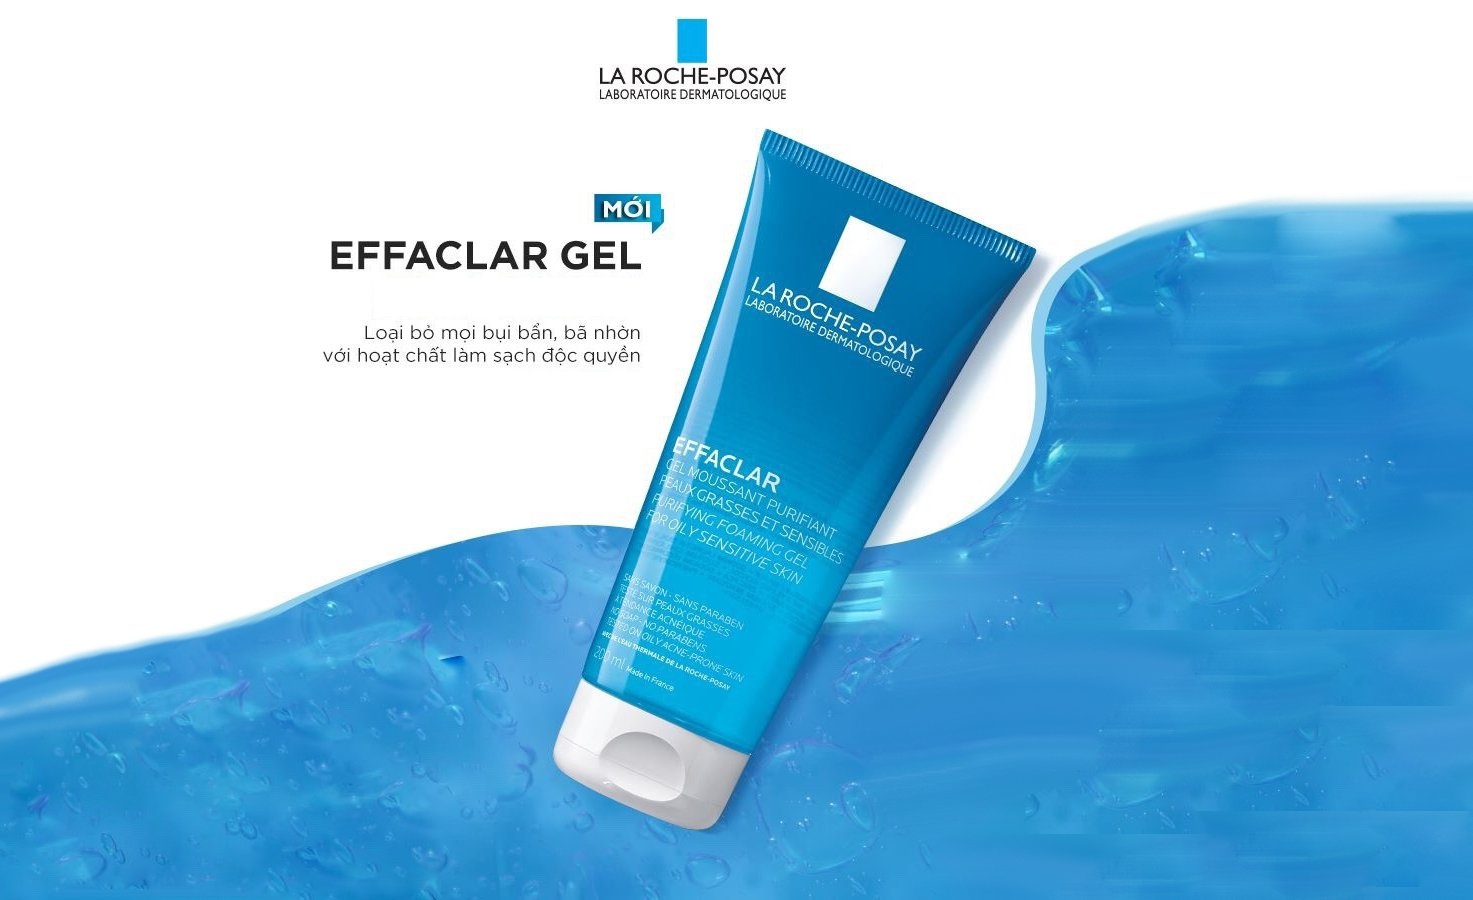 Sữa rửa mặt La Roche-Posay Effaclar giúp làm sạch sâu cho da